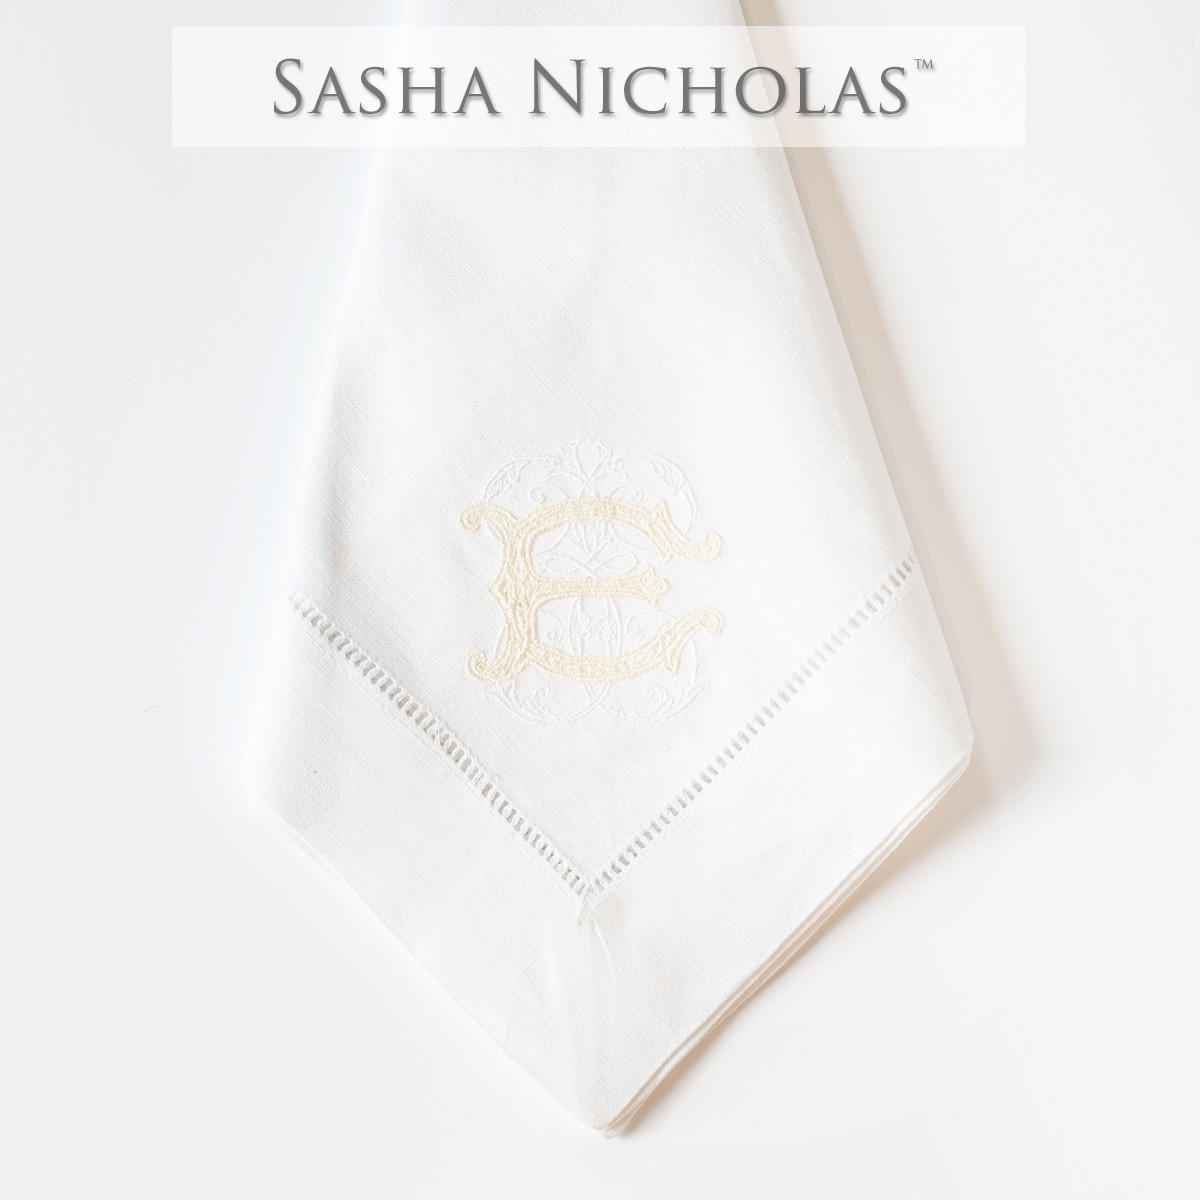 Gregory-romano Sasha Nicholas White Linen Dinner Napkin, Couture Monogram, Gregory-Romano SNLIN100, Sasha Nicholas